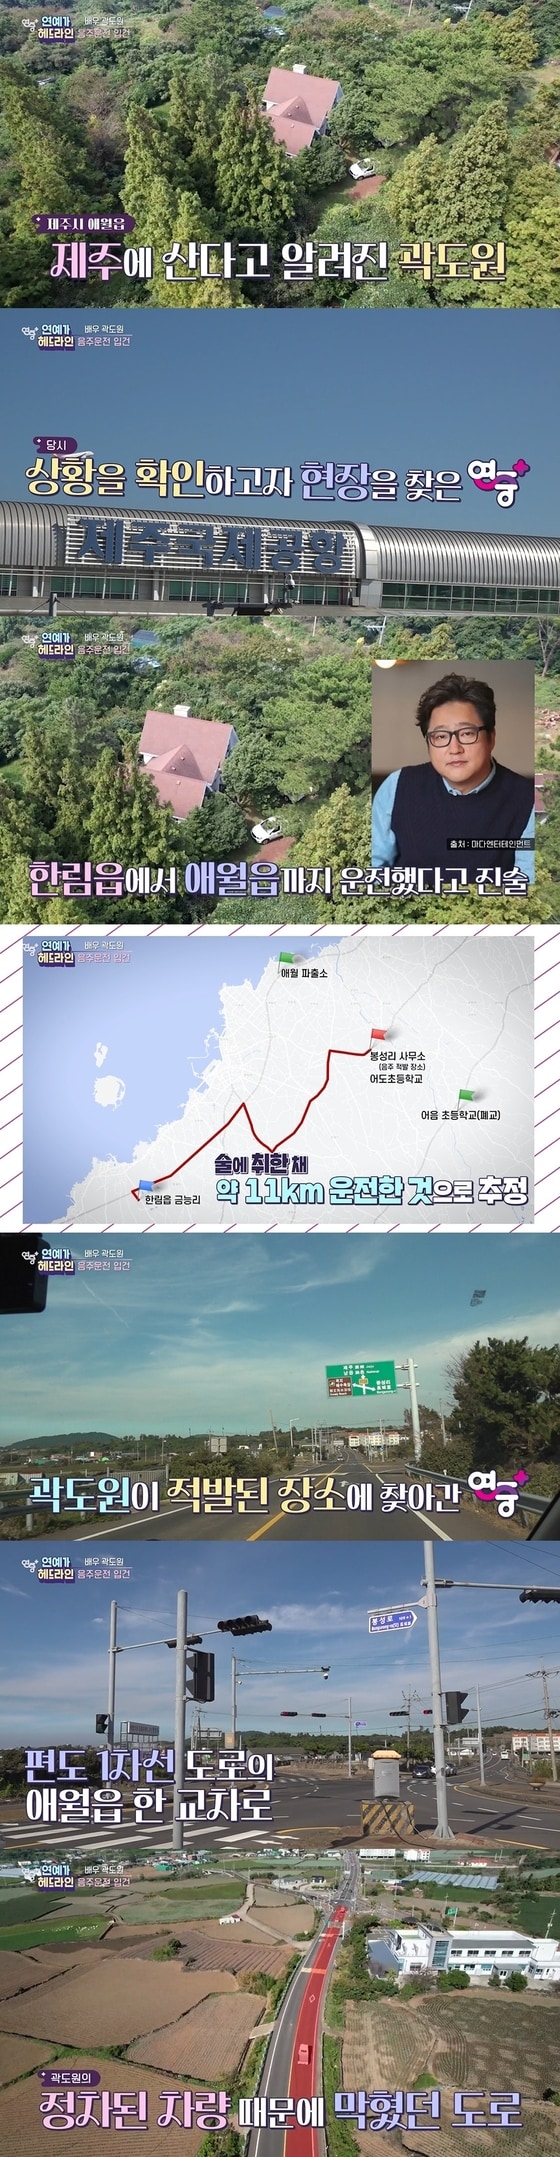 KBS 2TV 연중플러스 캡처